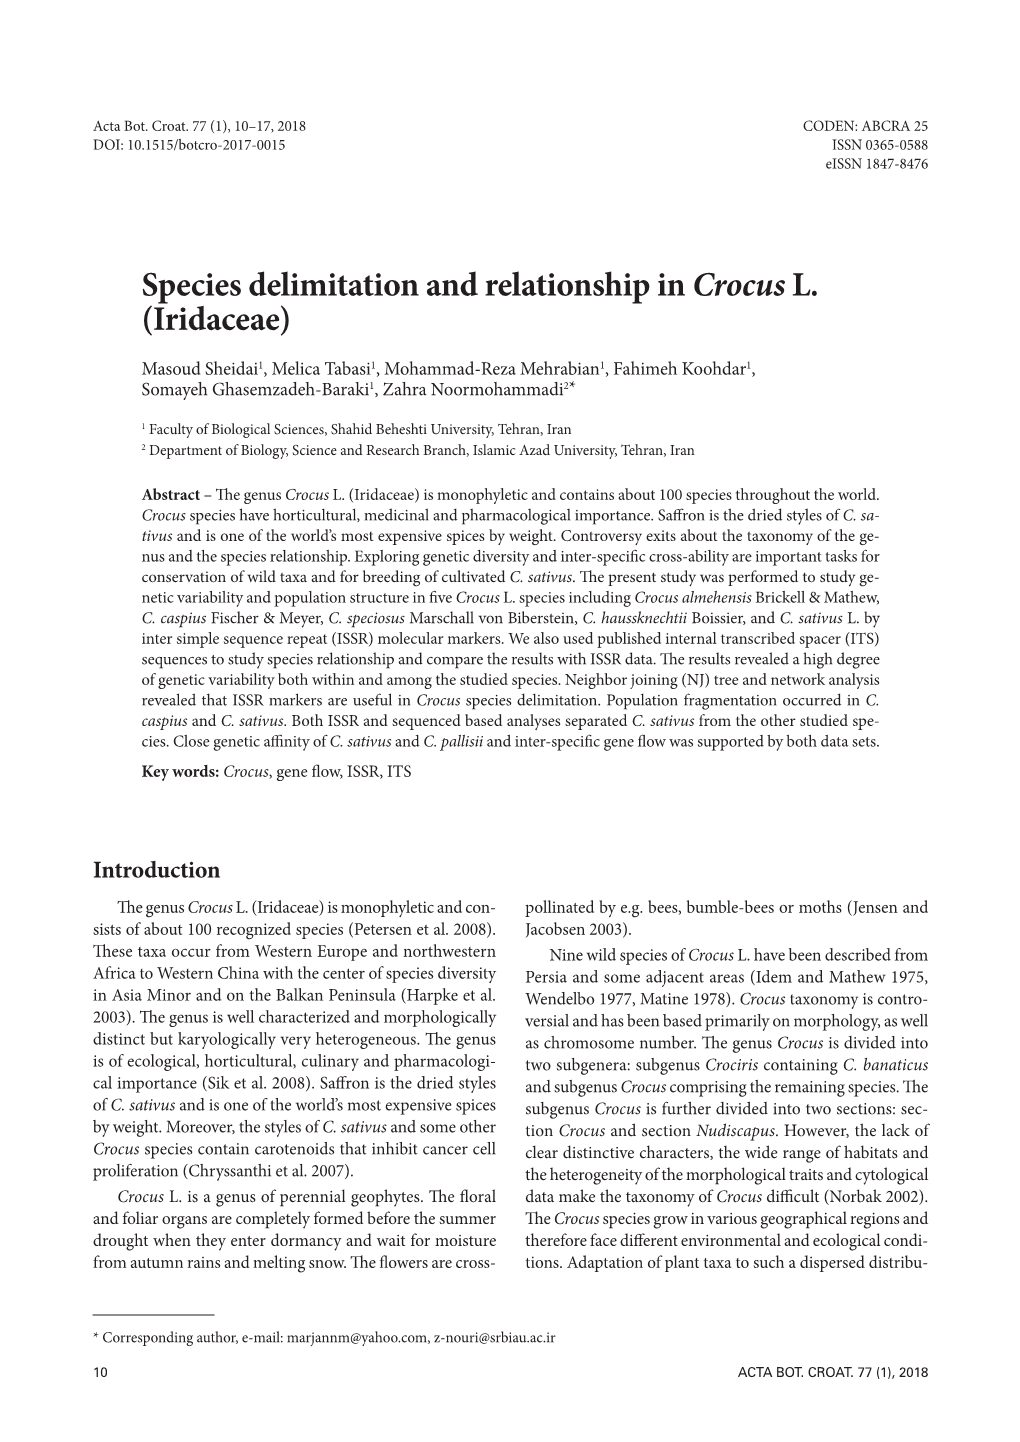 Species Delimitation and Relationship in Crocus L. (Iridaceae)